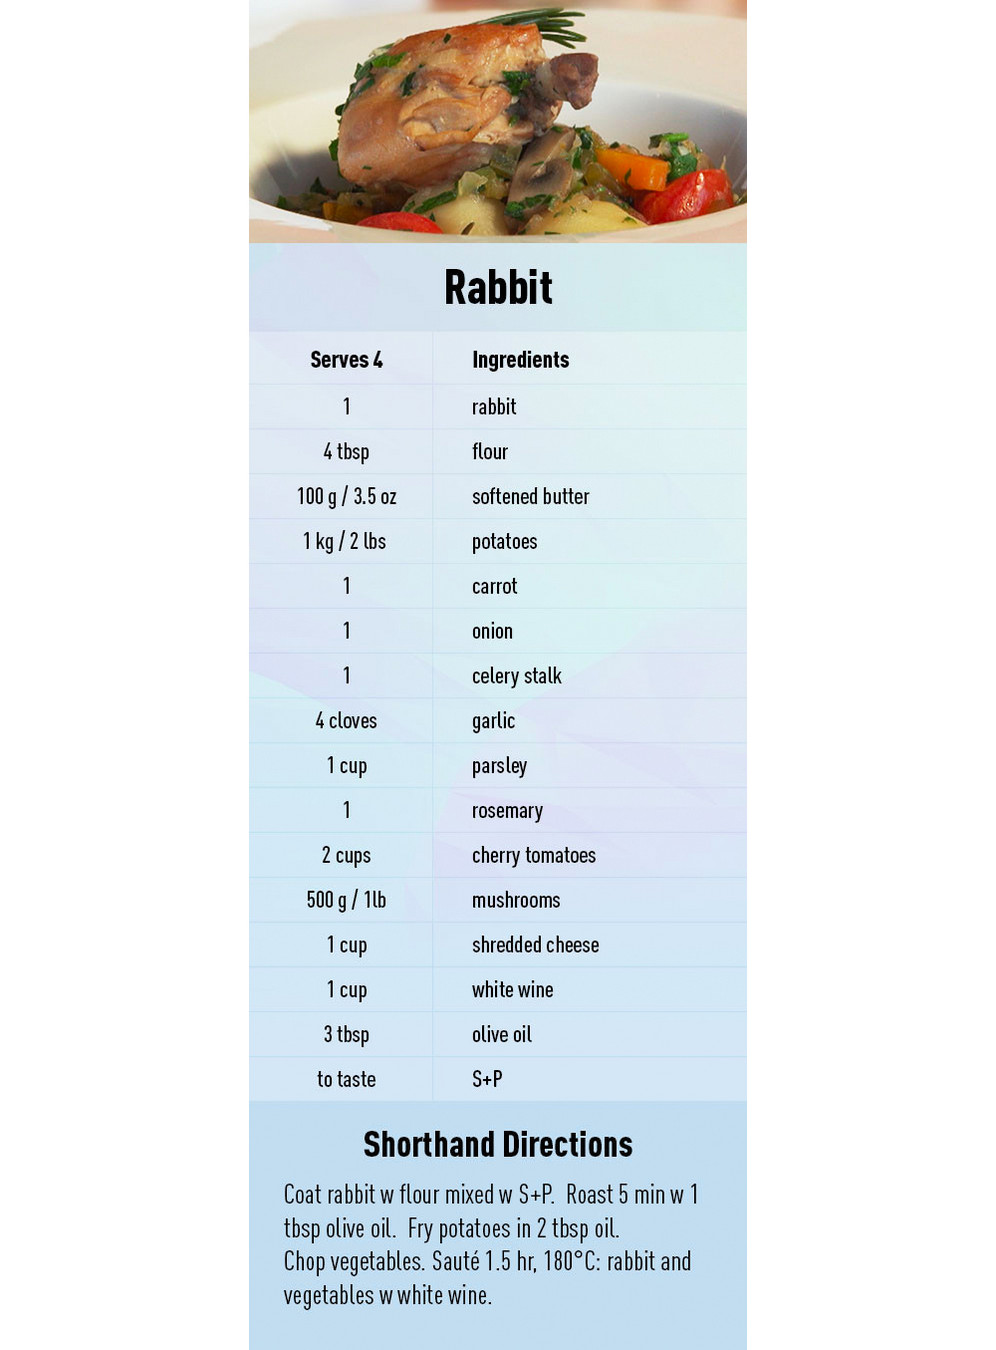 Rabbit recipe